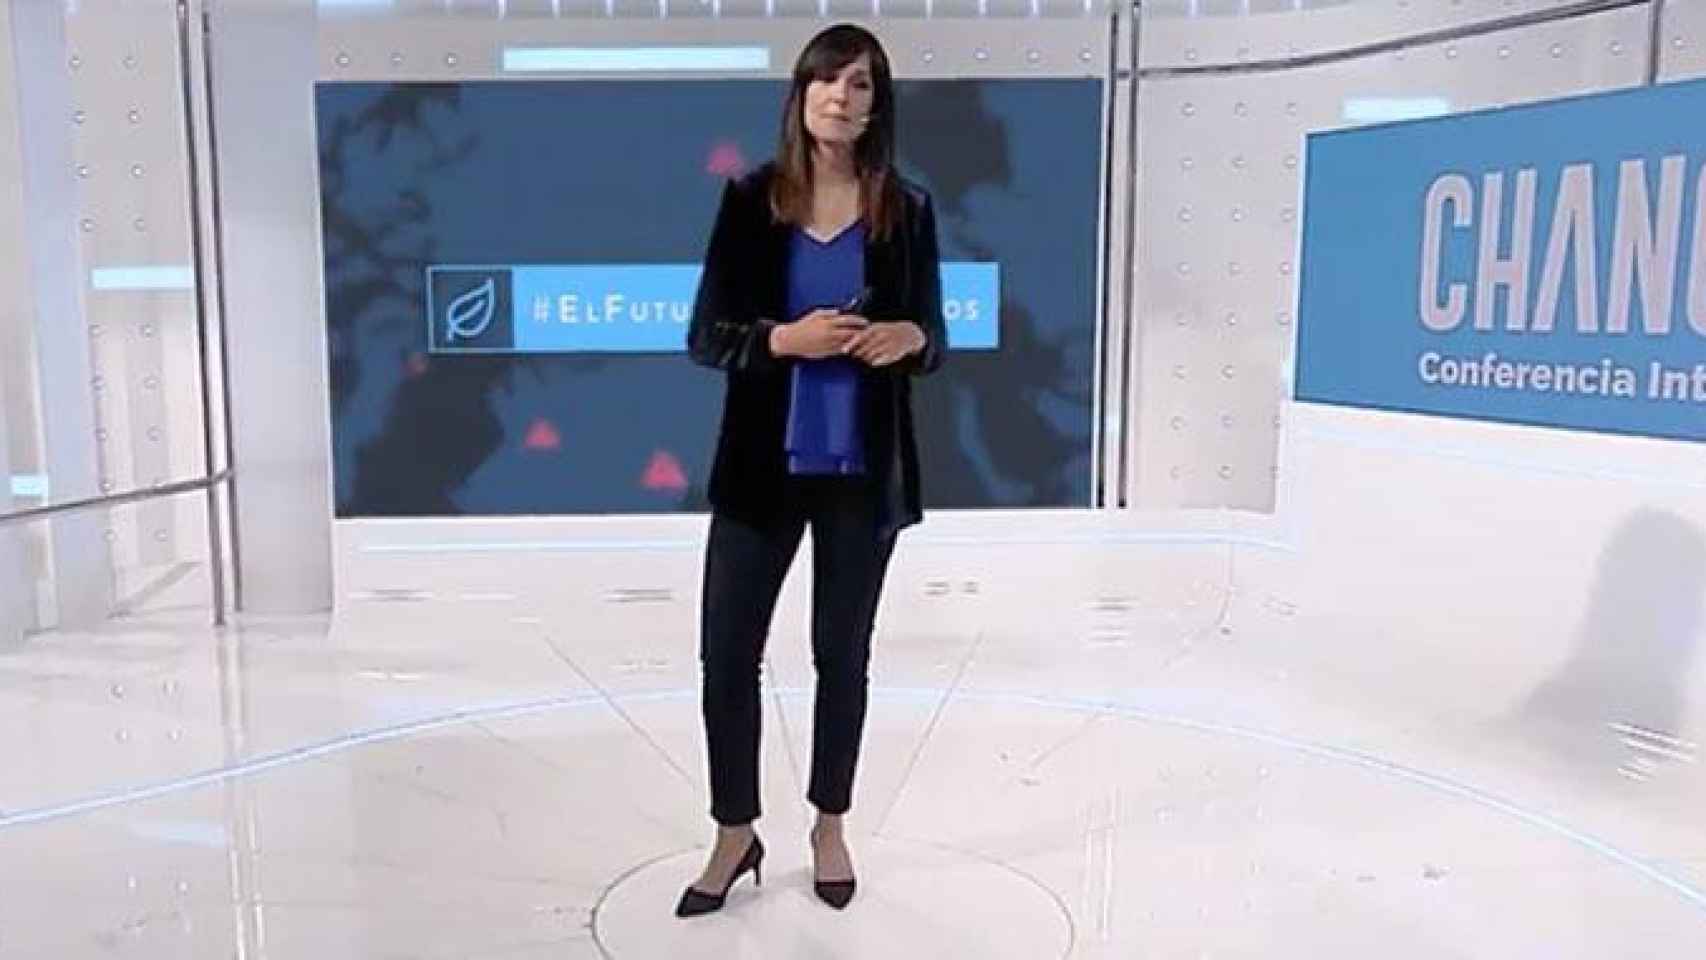 Mònica López, meteoróloga del Telediario / TVE